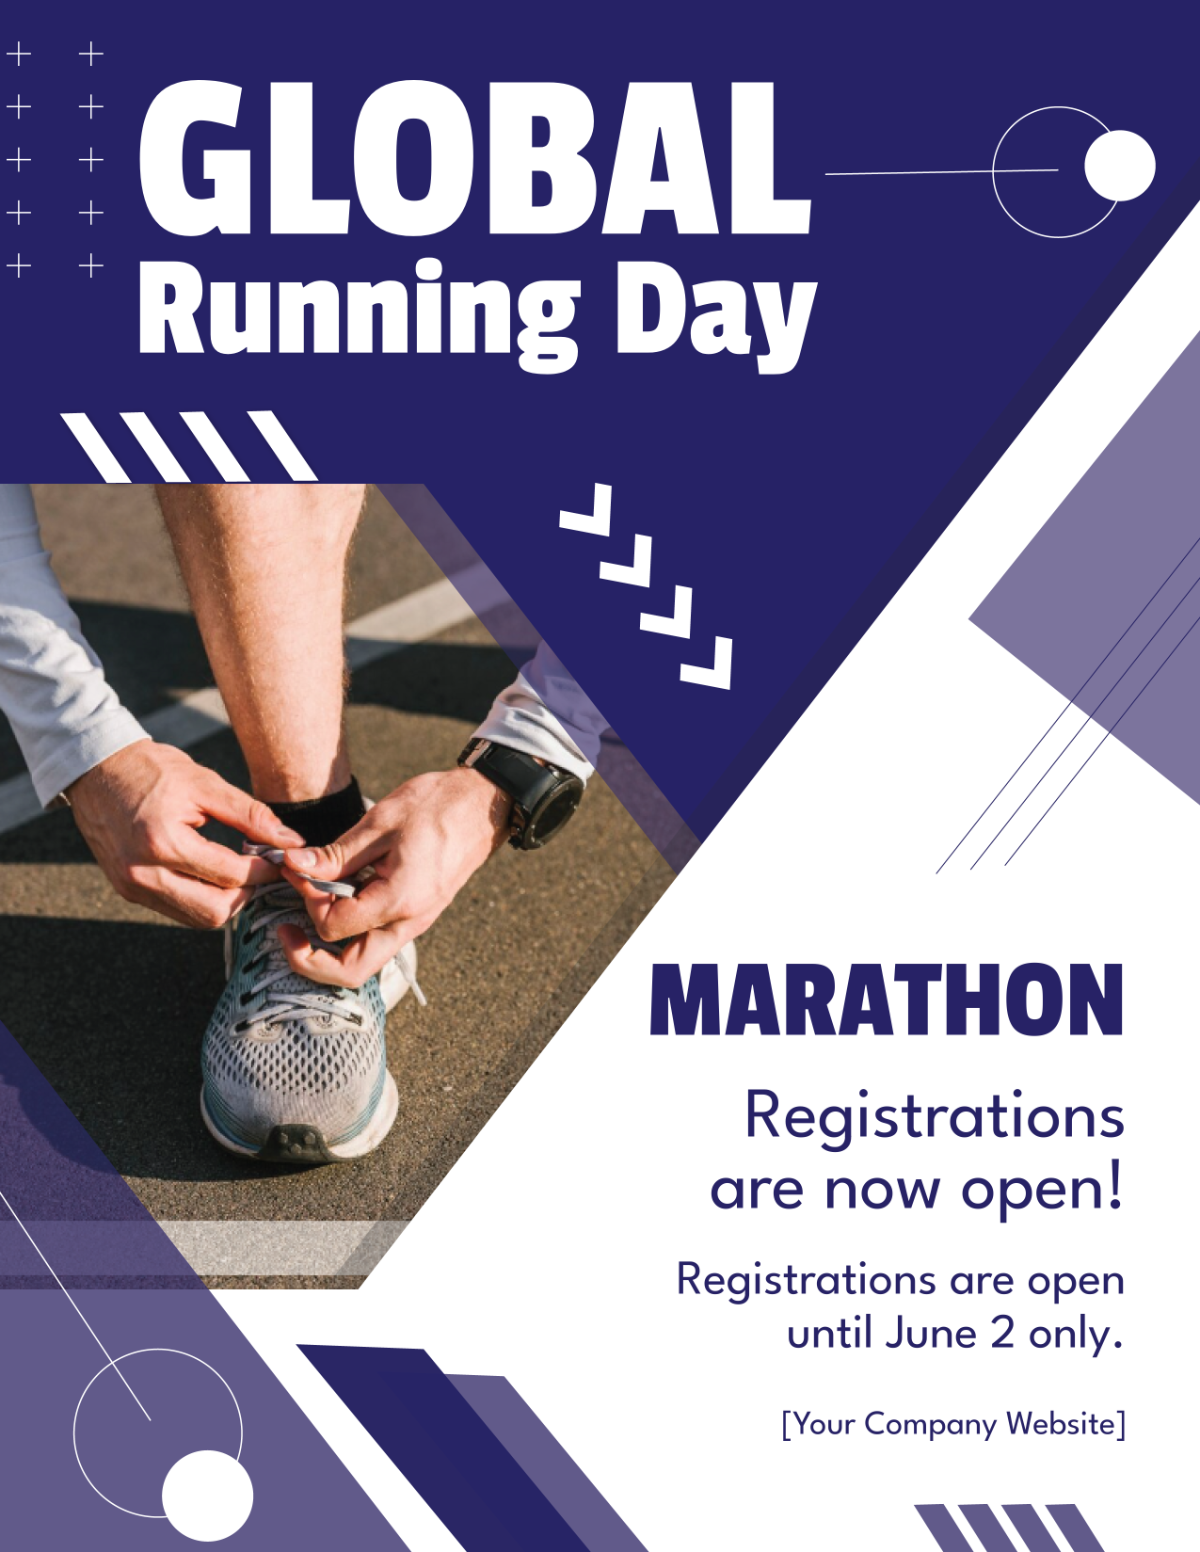 Global Running Day Flyer